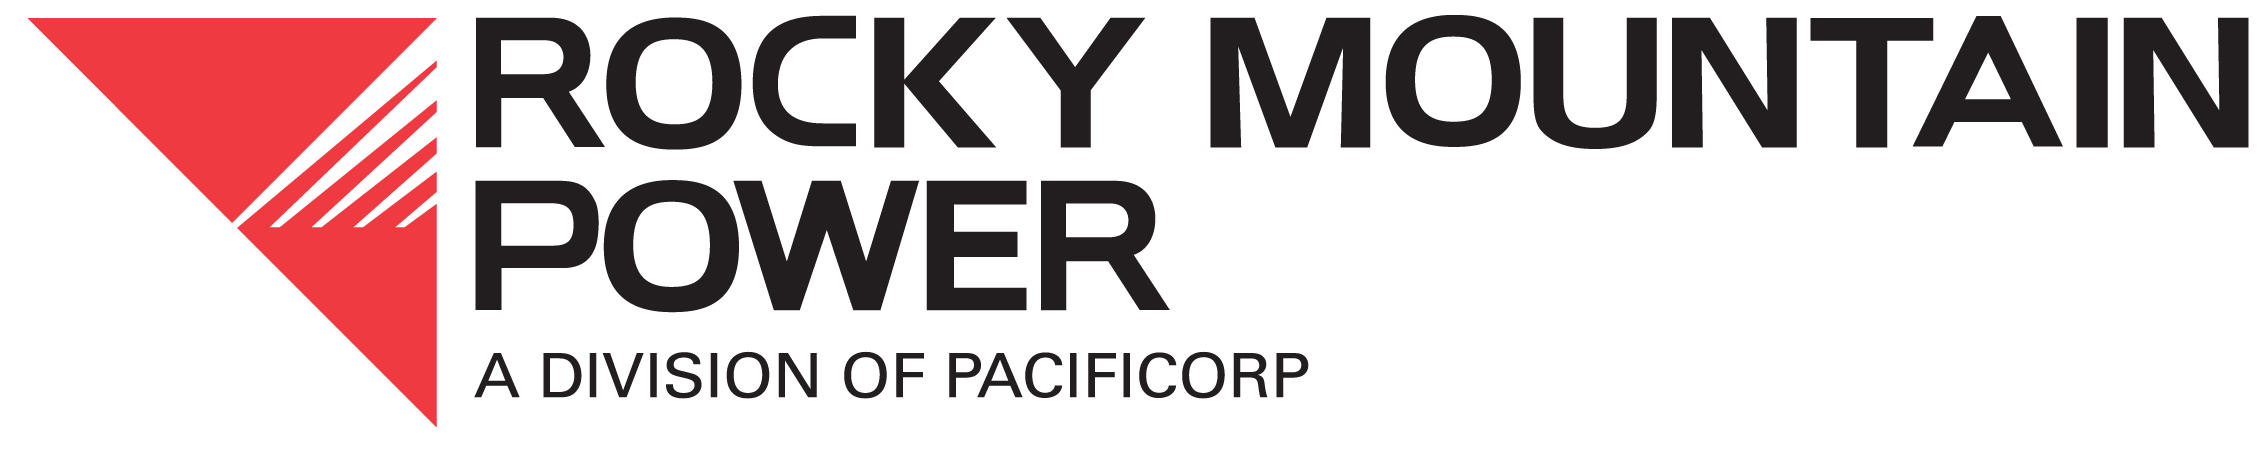 Rocky Mountain Power_Utah Global Diplomacy